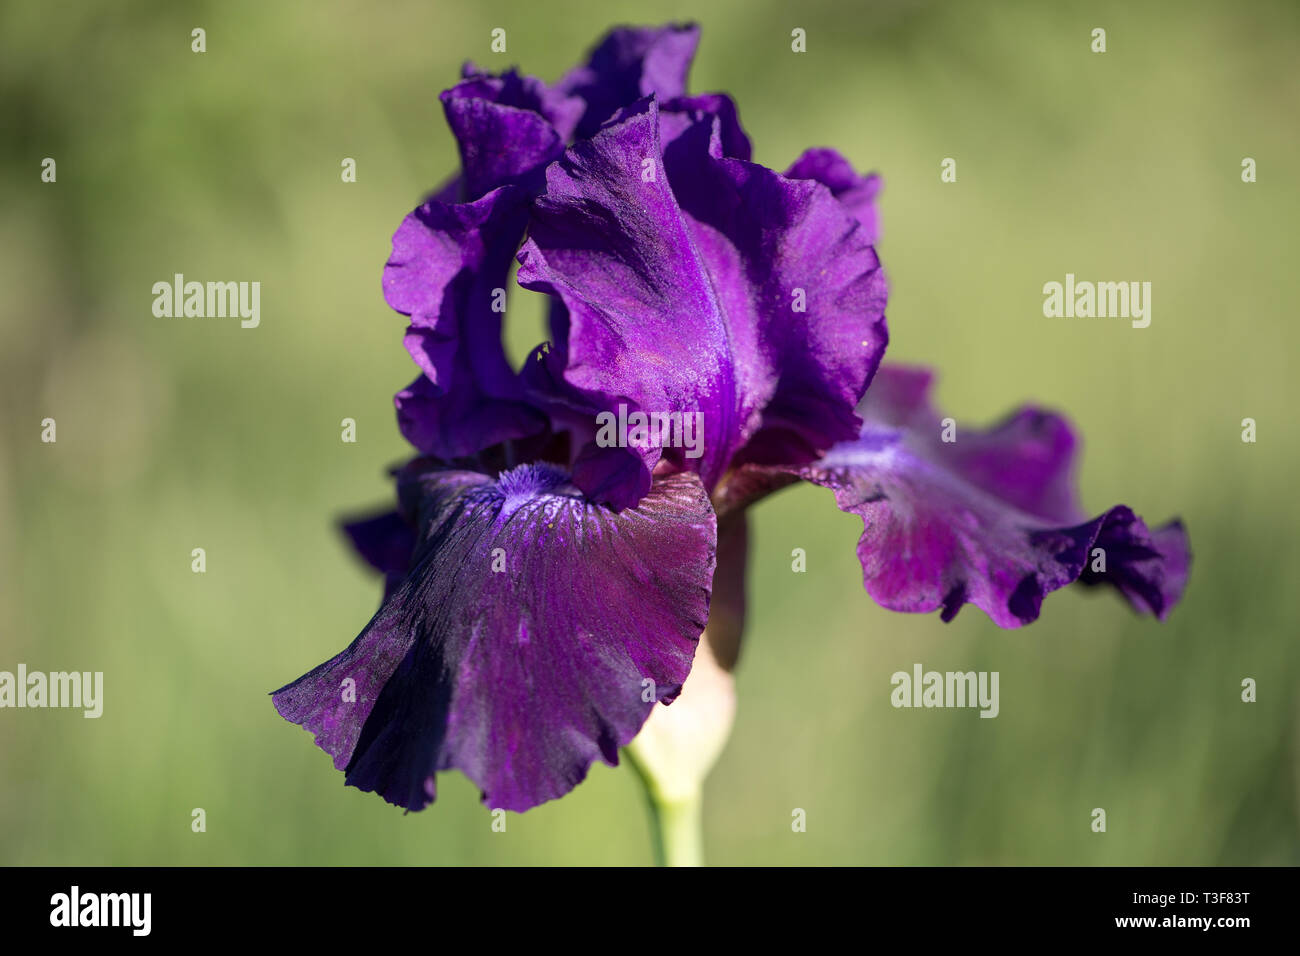 A closeup of a purple violet velvet bearded iris using a shallow depth of field Stock Photo